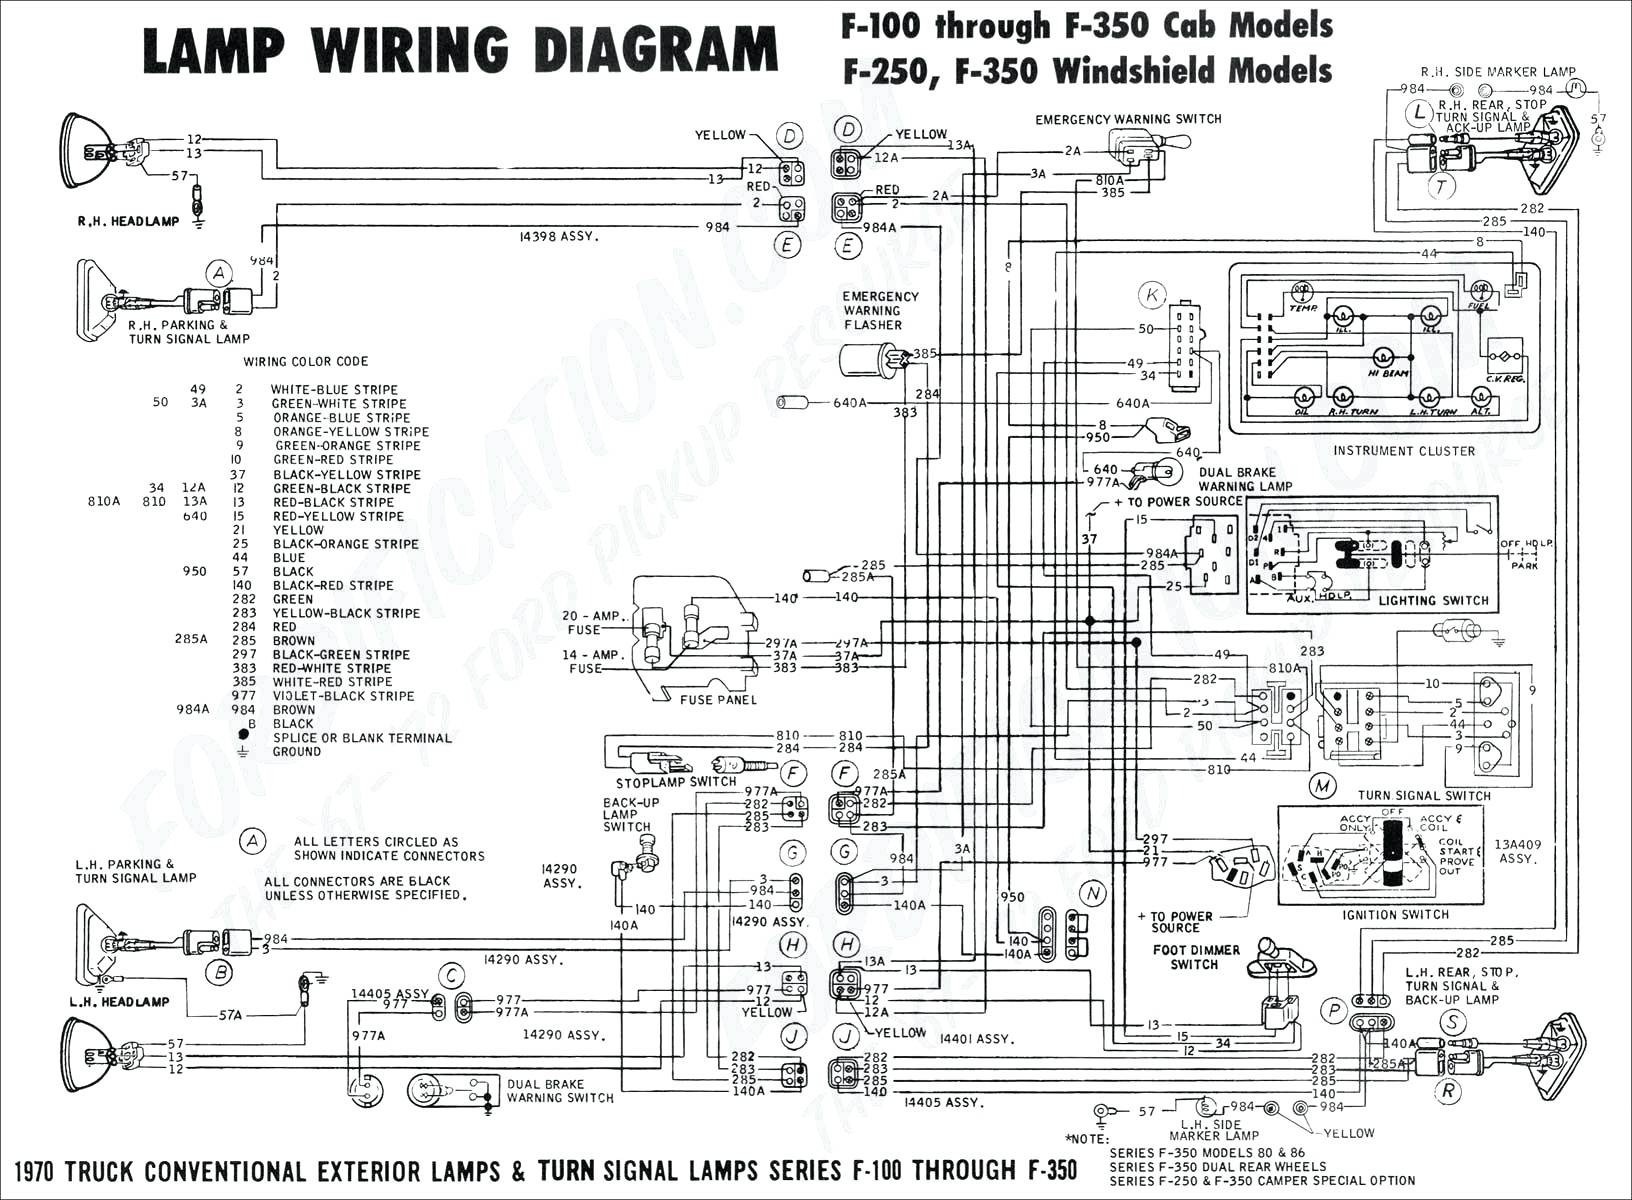 Semi Trailer Wiring Diagram Semi Trailer Wiring Diagram Unique Wiring Diagram ford F150 Trailer Lights